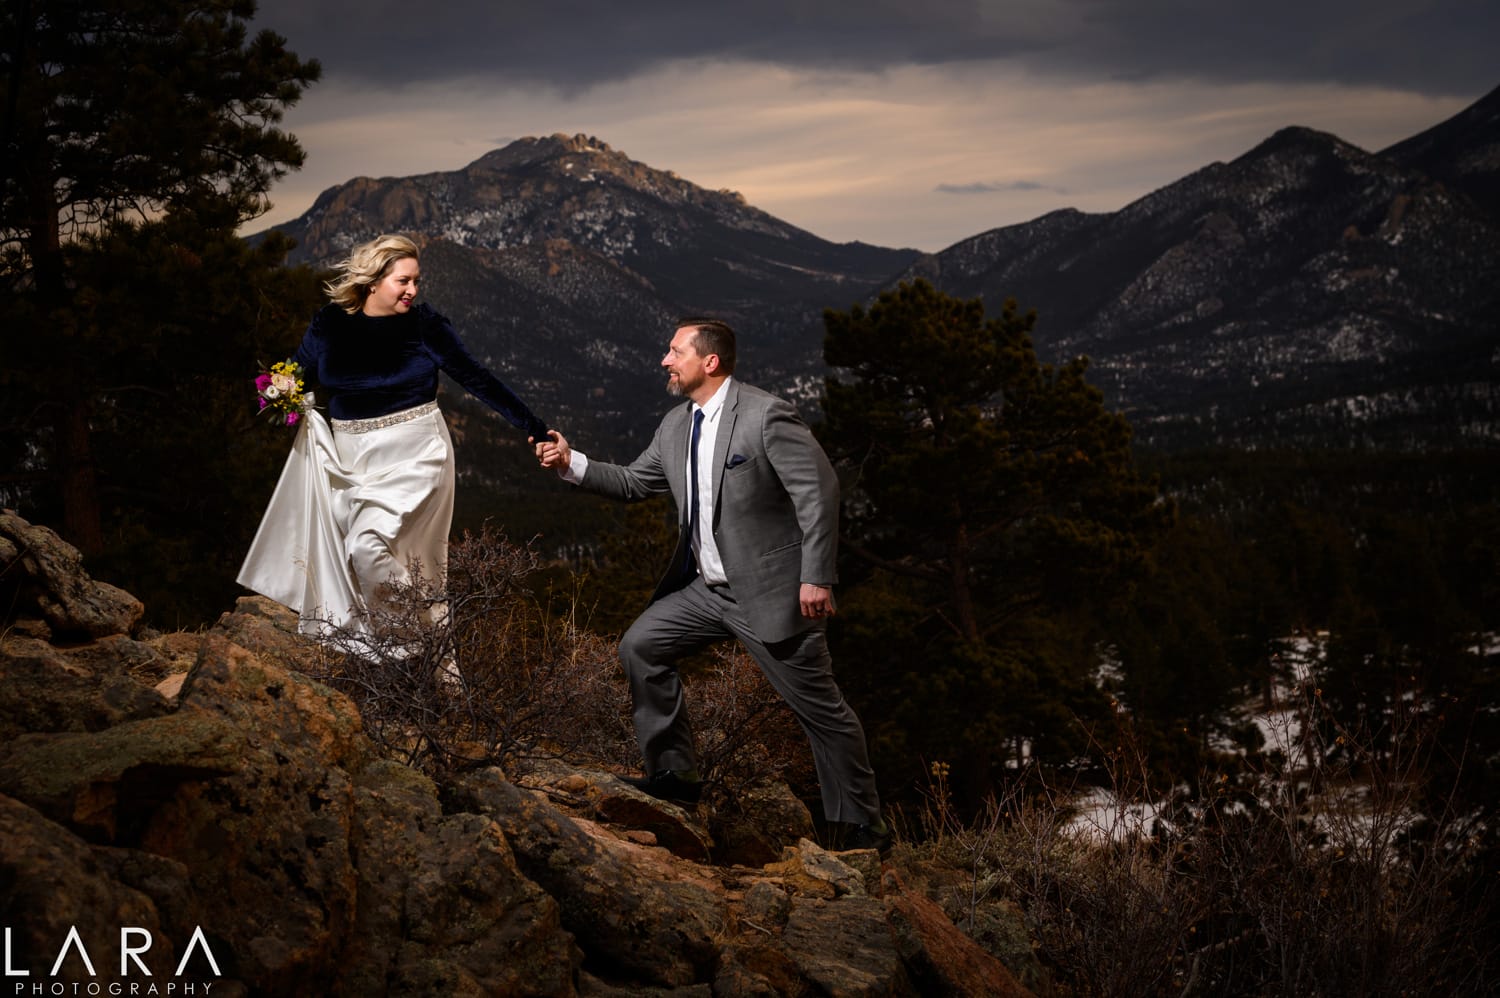 Lara Photography - Colorado Elopement weddings